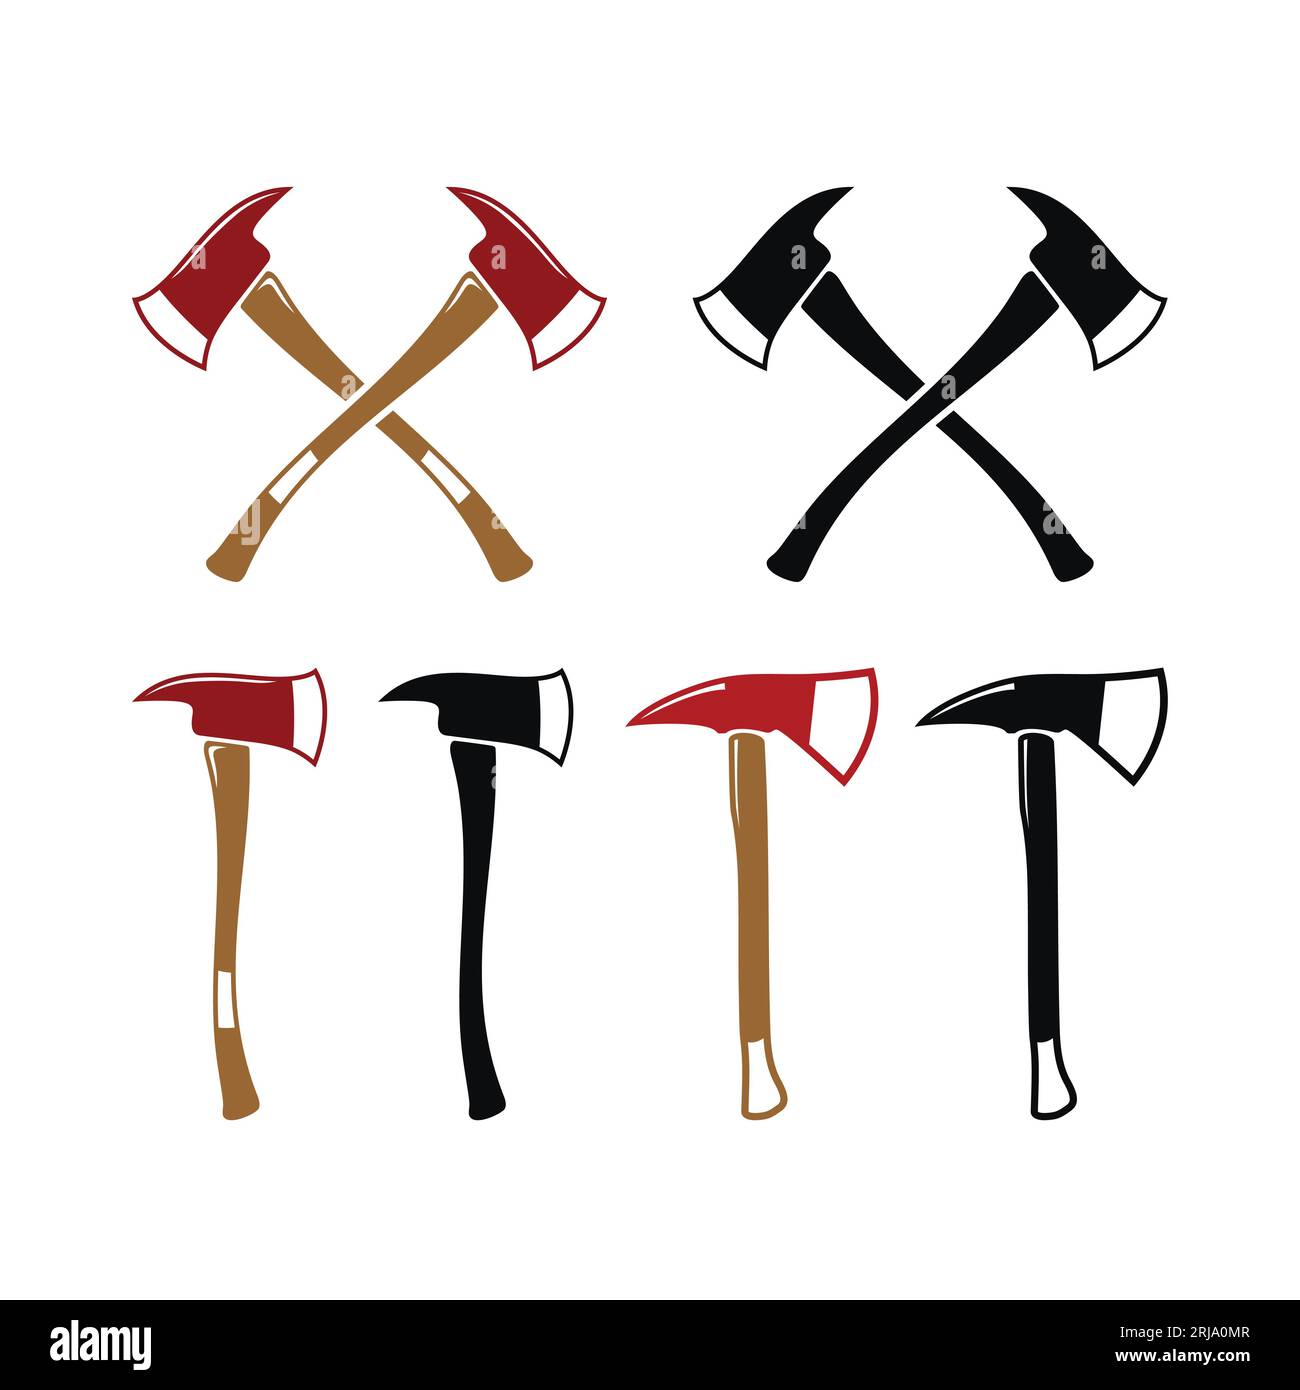 Cross axe, logo de collection de haches en bois Lumberjack Firefighter Illustration de Vecteur